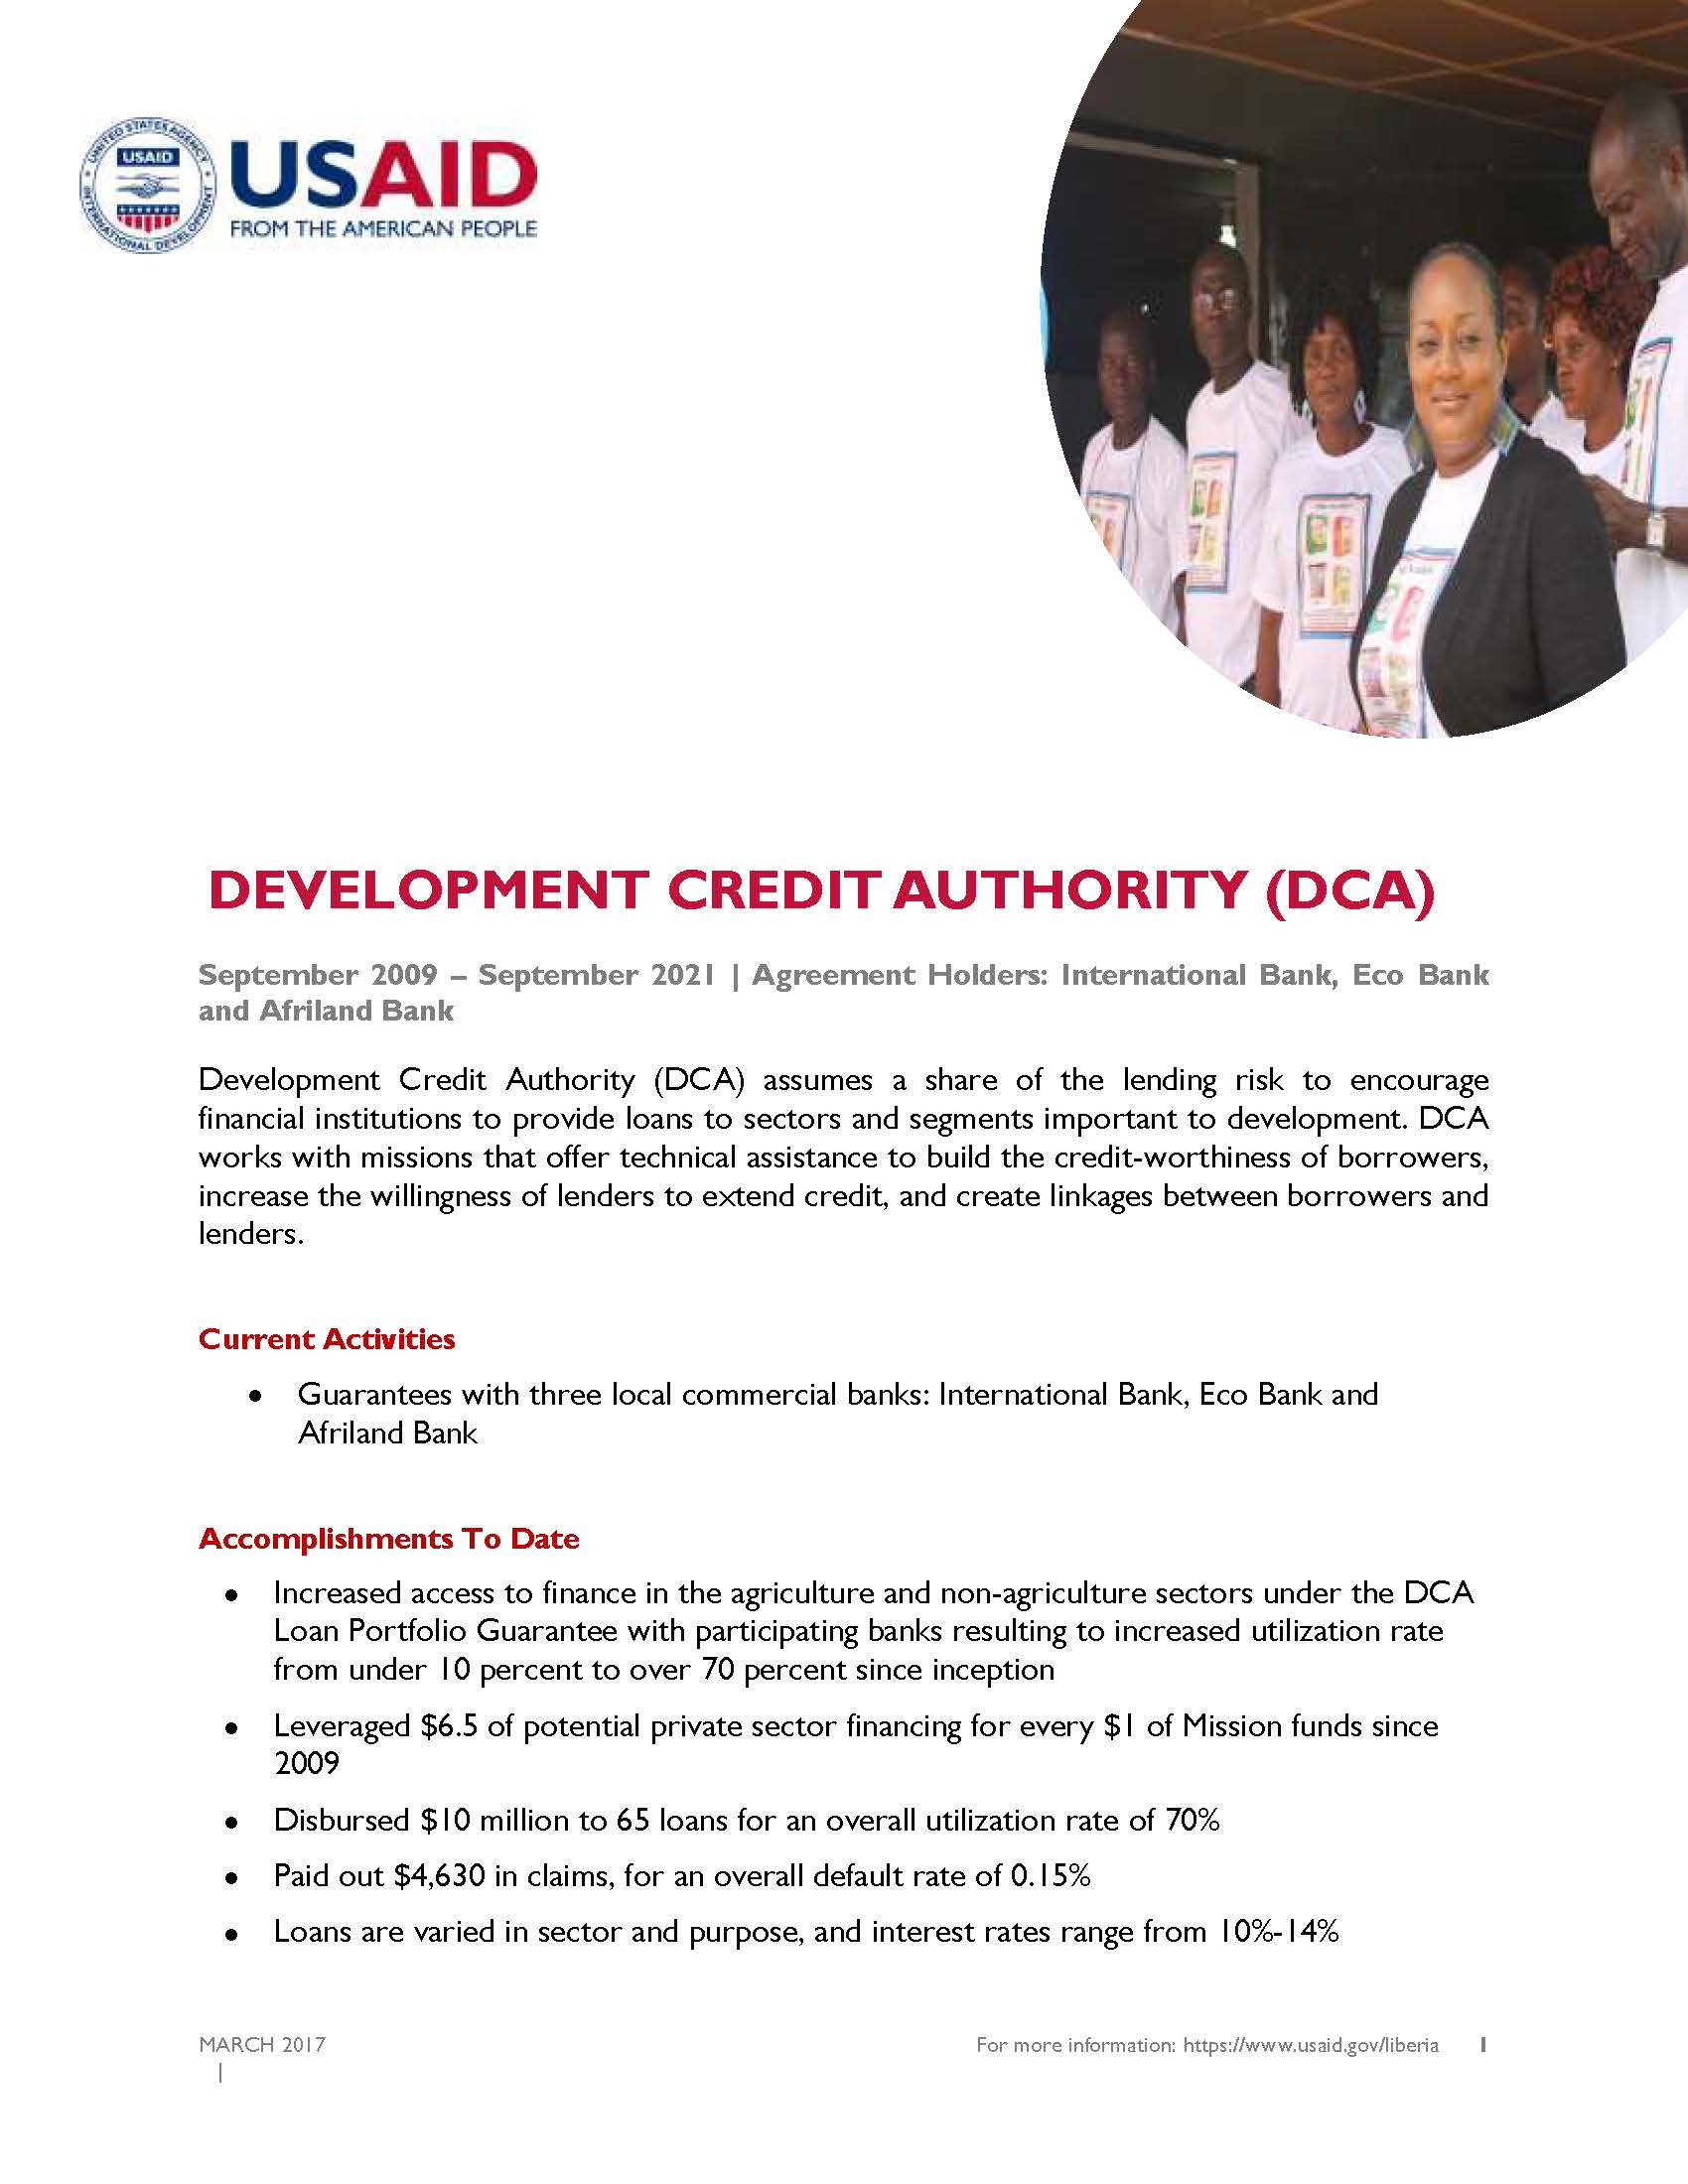 Development Credit Authority Fact Sheet 